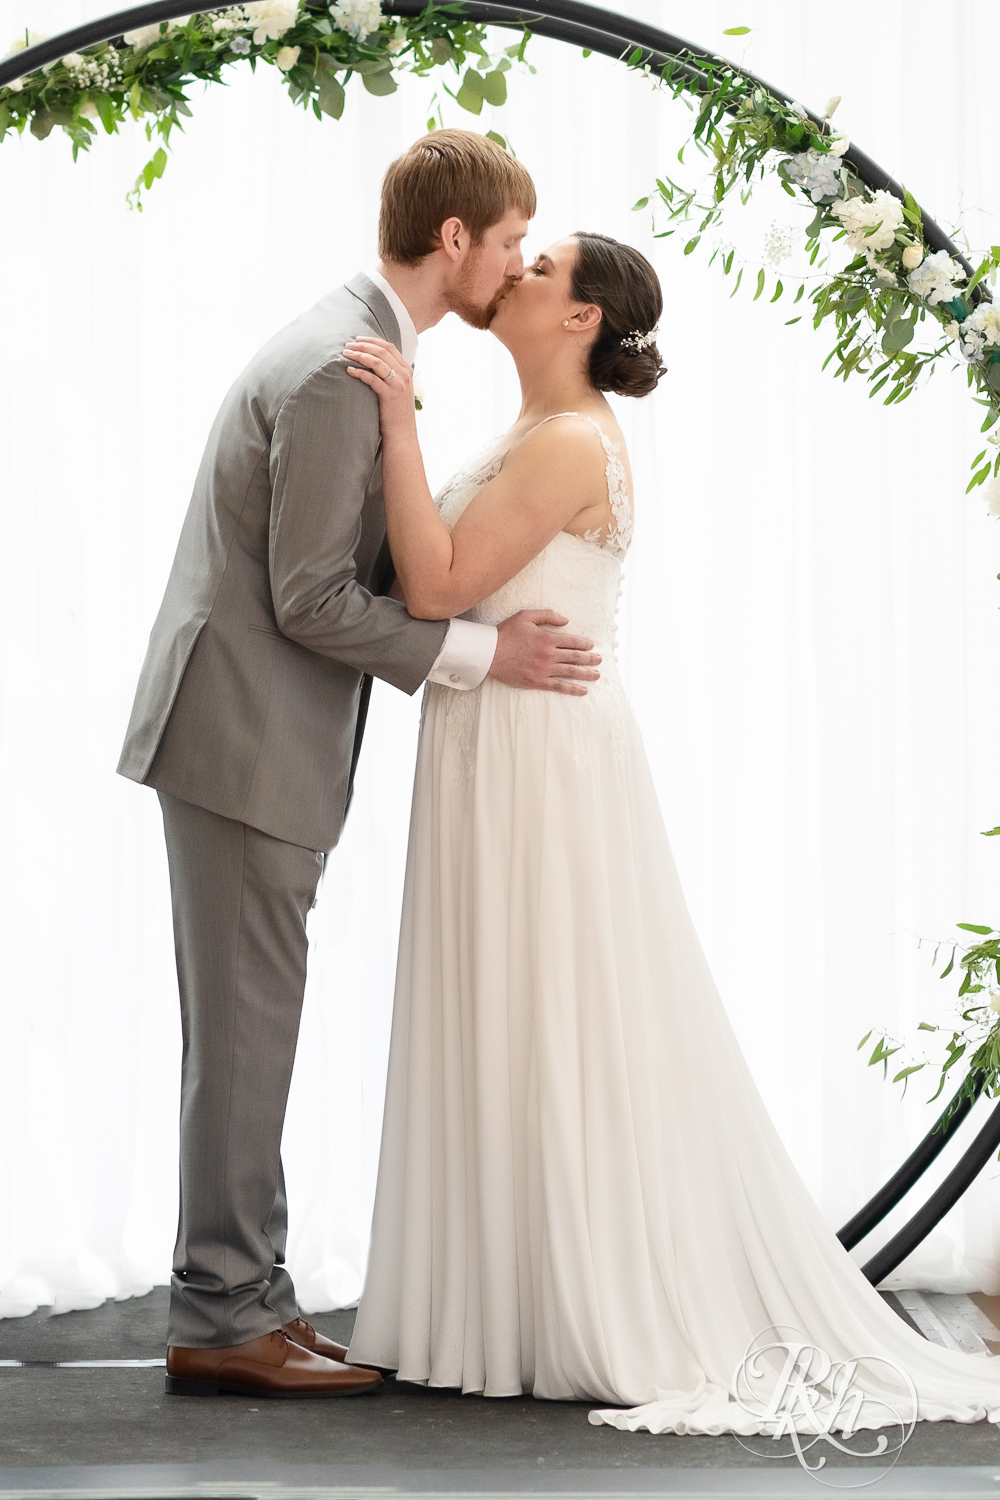 Bride and groom kiss during wedding ceremony at Doubletree Hilton Saint Paul in Saint Paul, Minnesota.